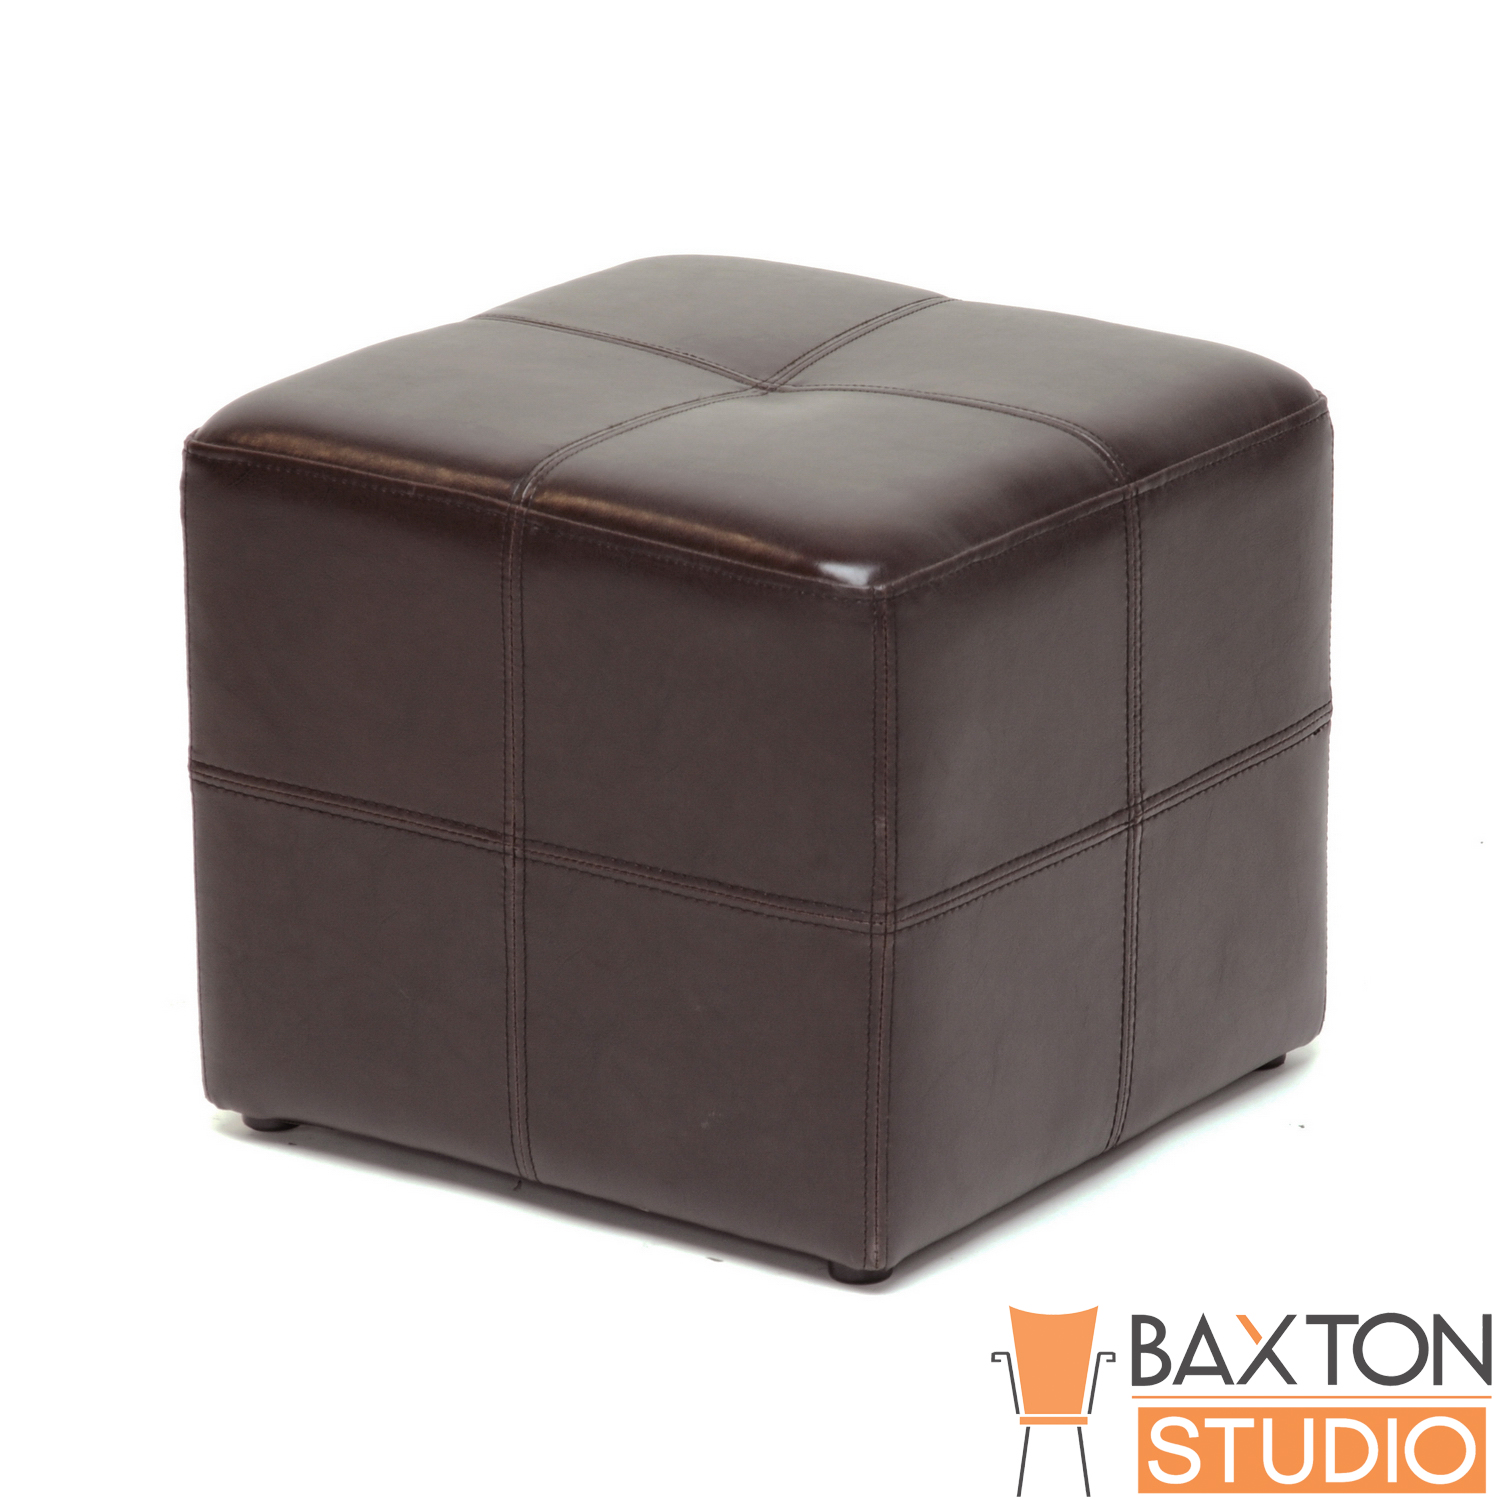 Baxton Studio 15"H x 16"W x 16"D Bonded Leather Ottoman - Dark Brown